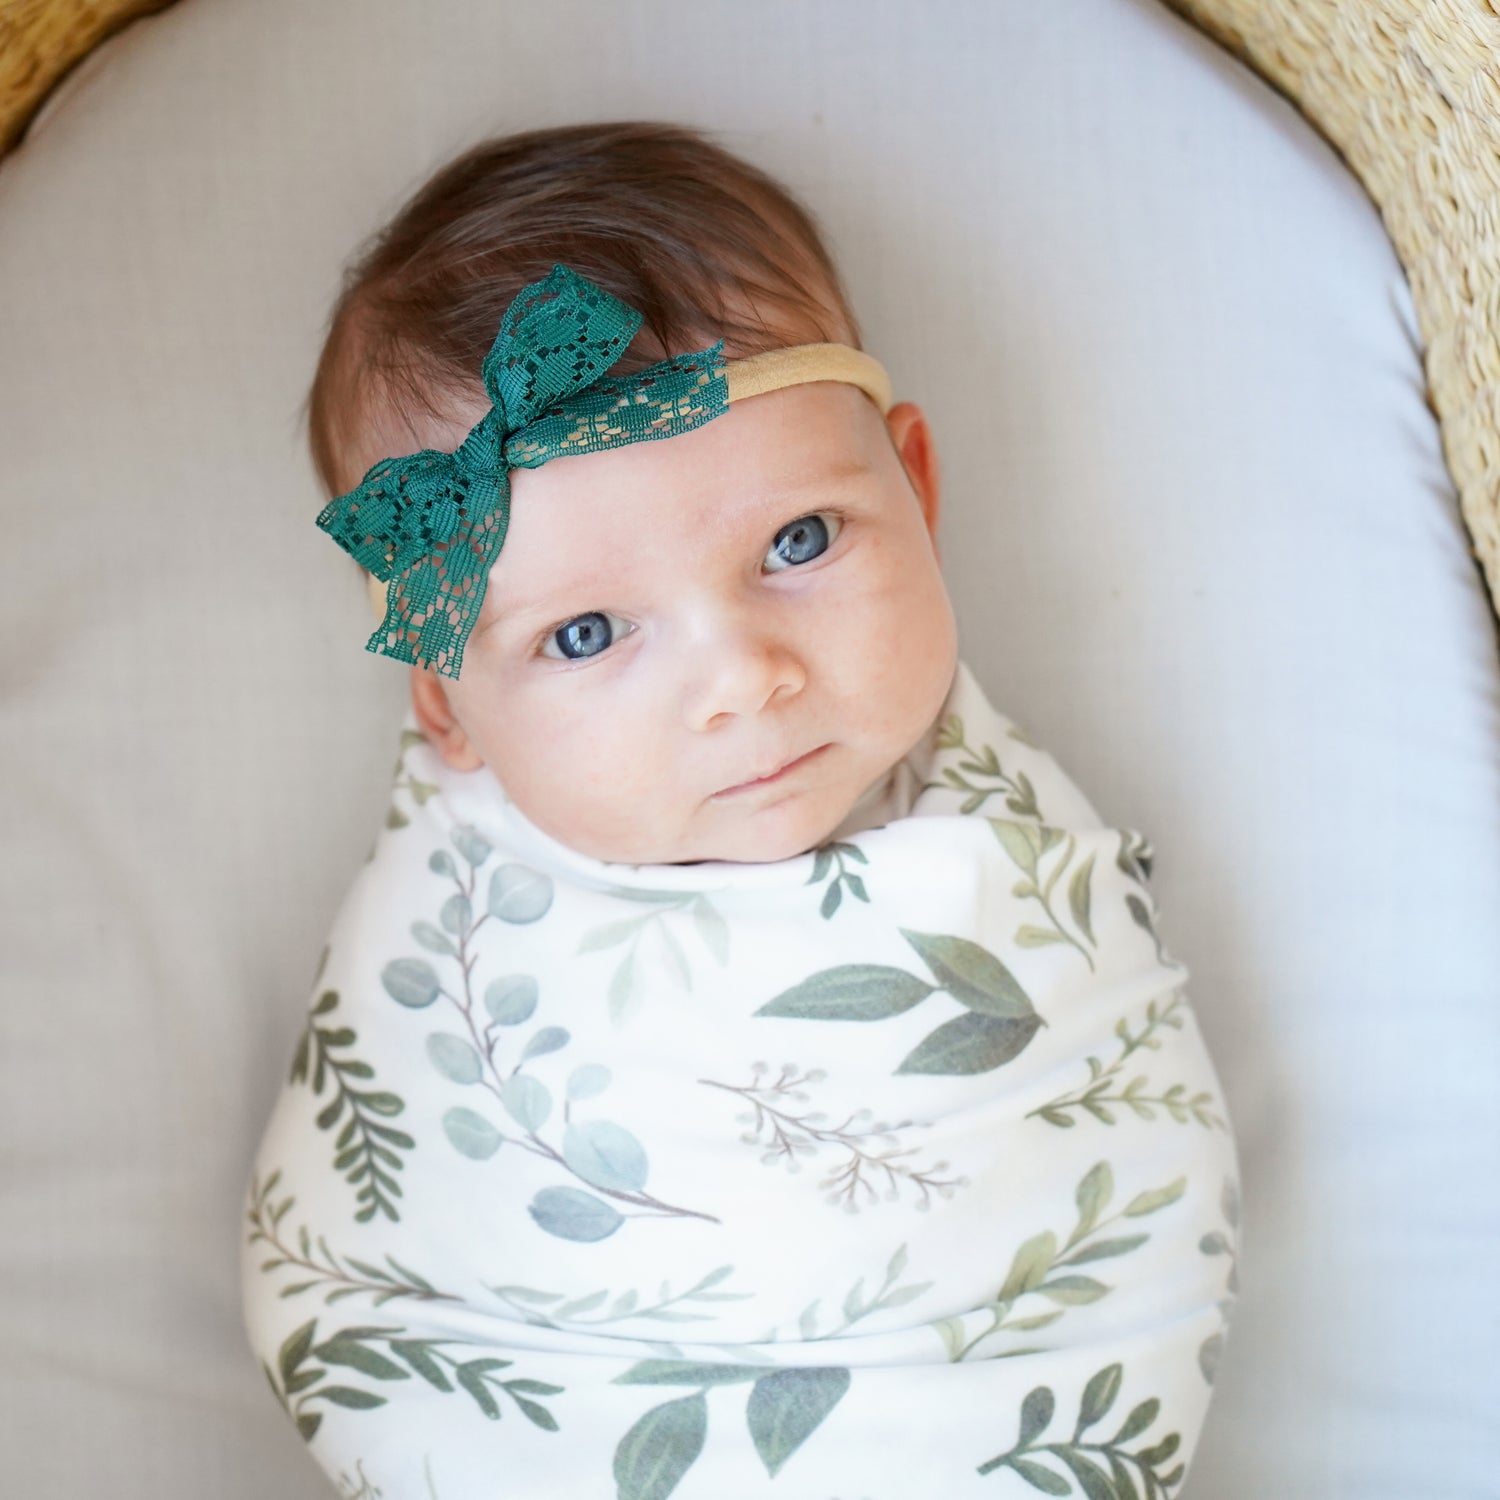 newborn photography greenery swaddle and green bow headband baby bassinet